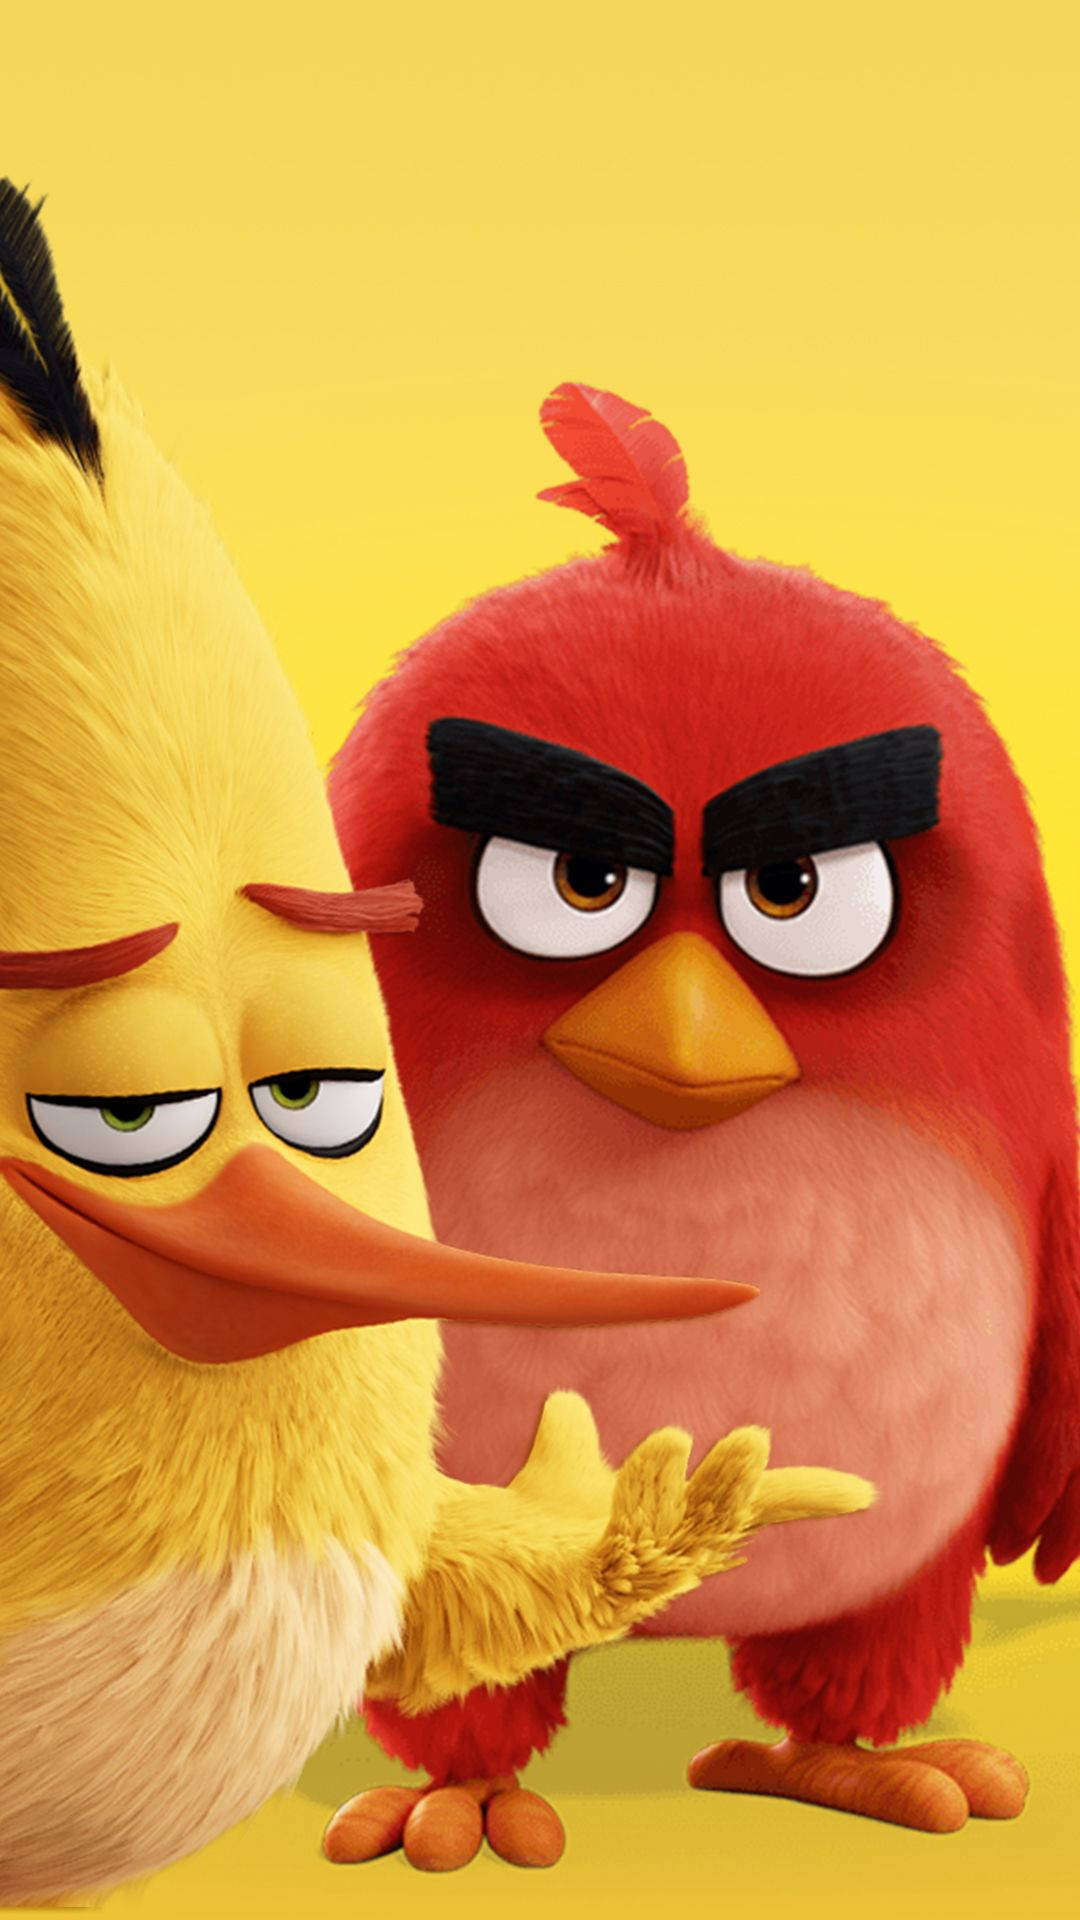 The Angry Birds Movie 2 Scheming Birds Wallpaper